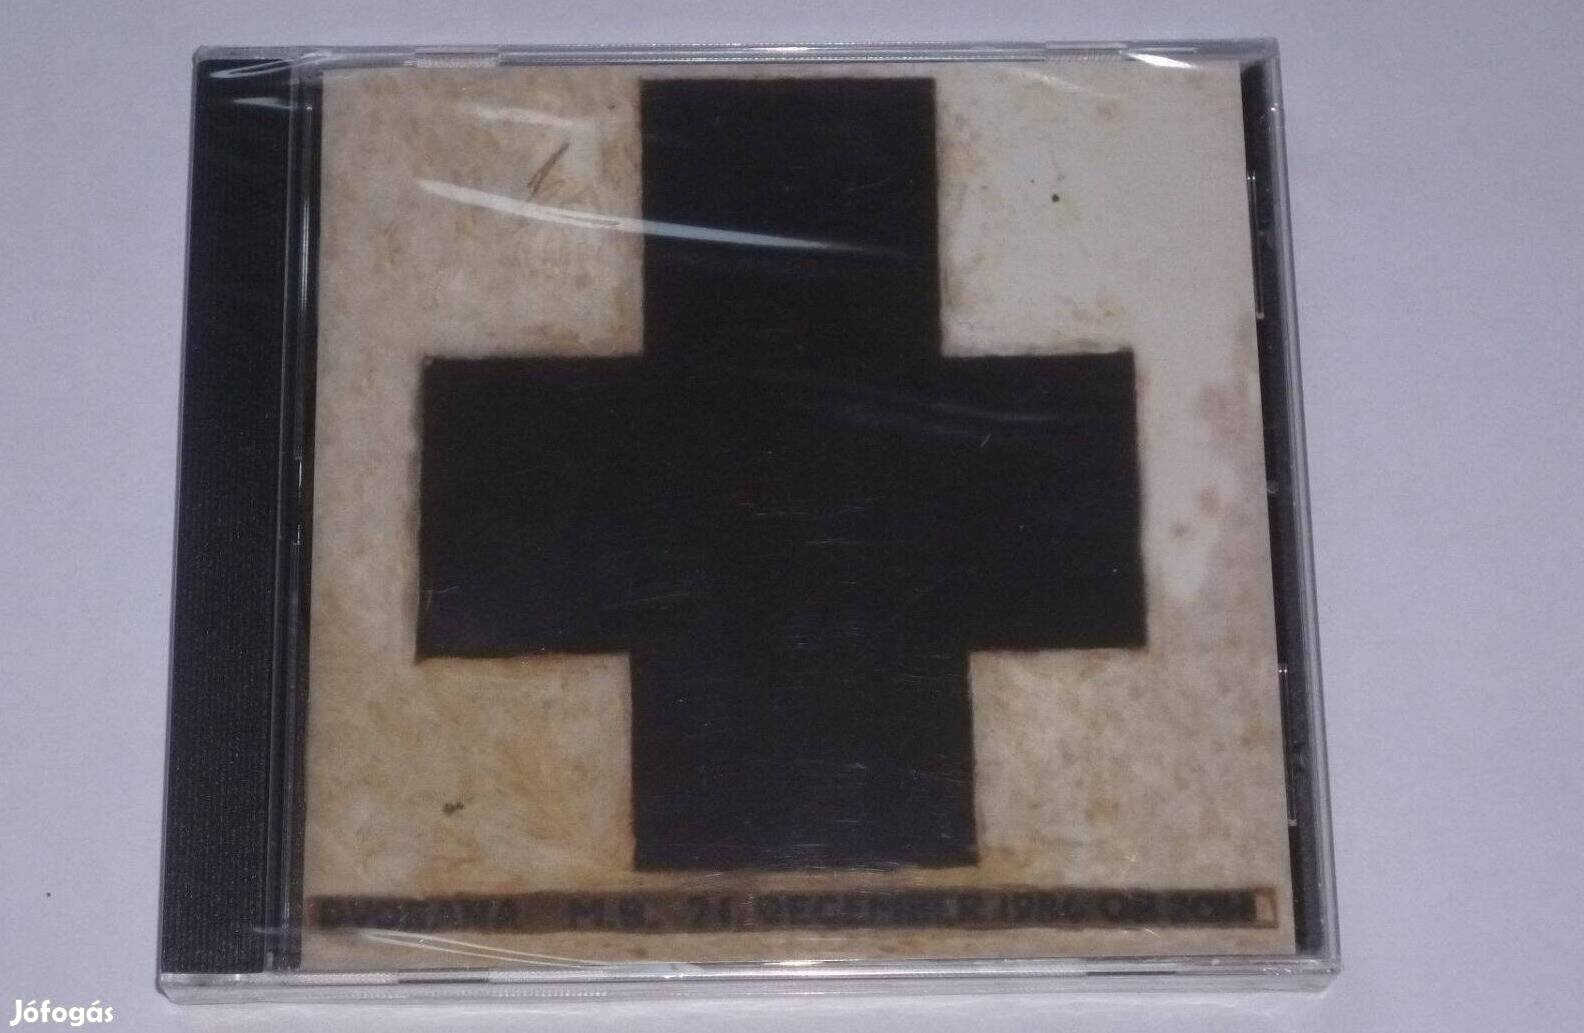 Laibach - M.B. December 21, 1984 CD